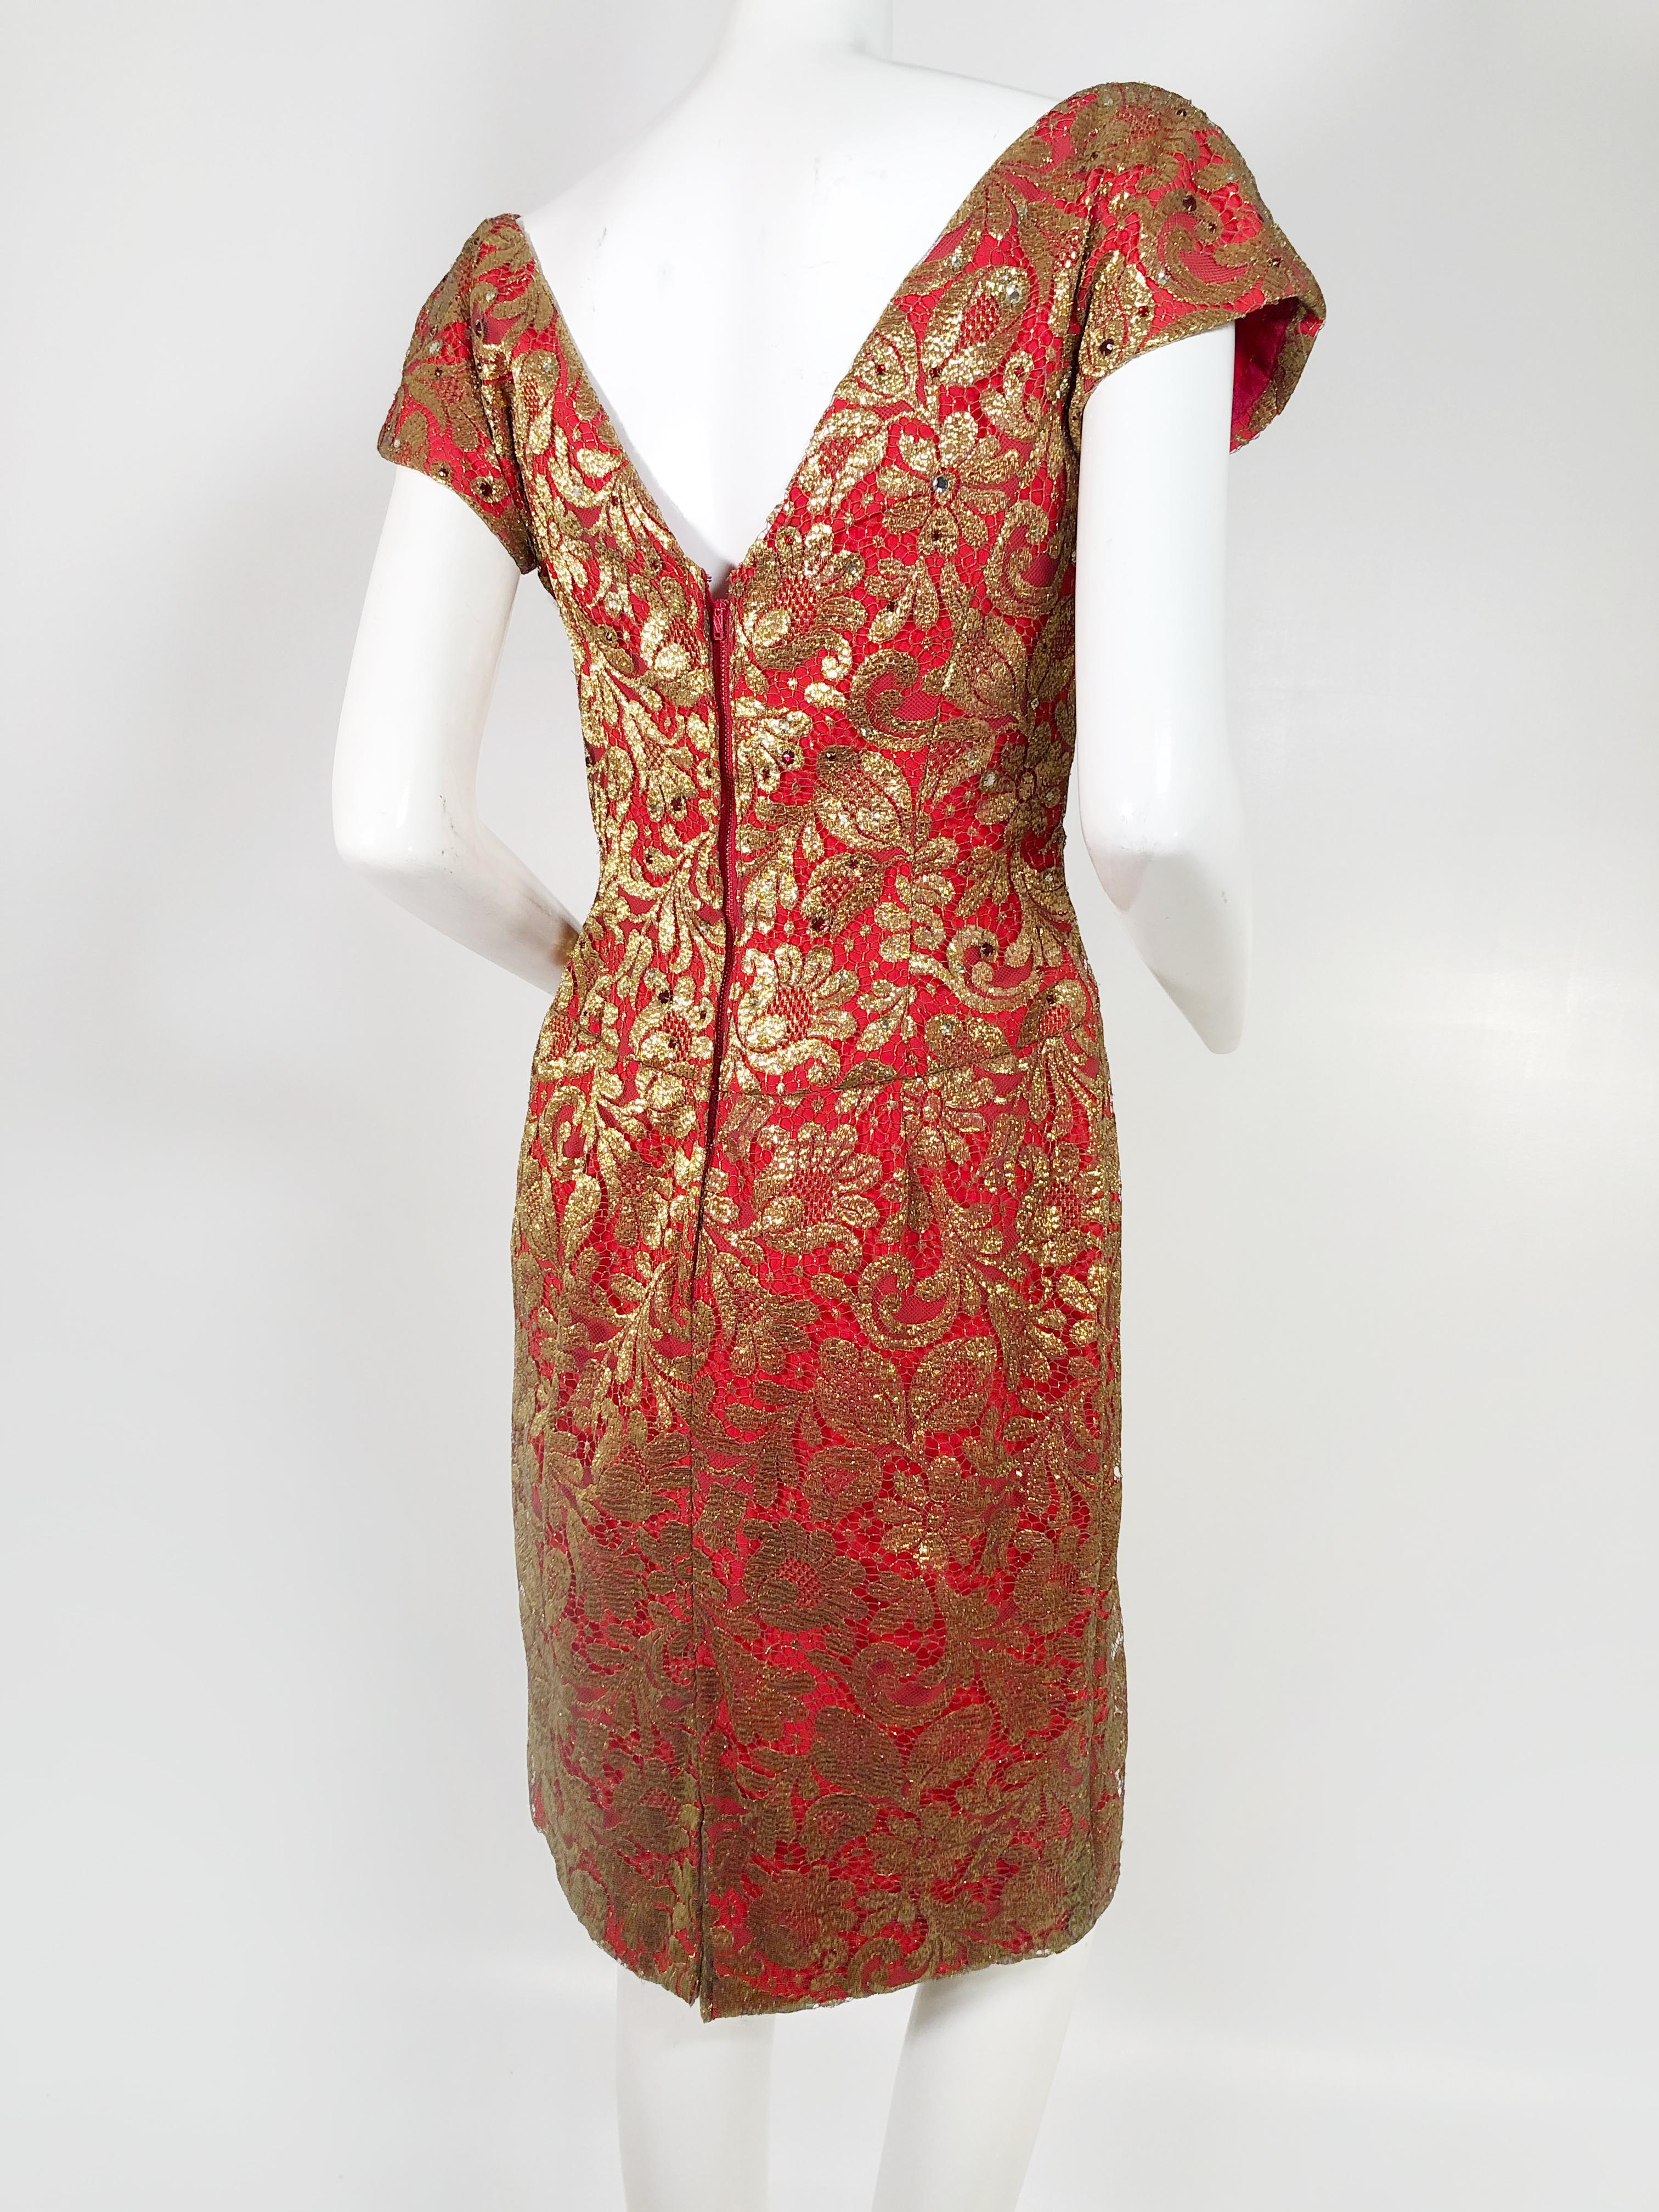 1950s sheath dress